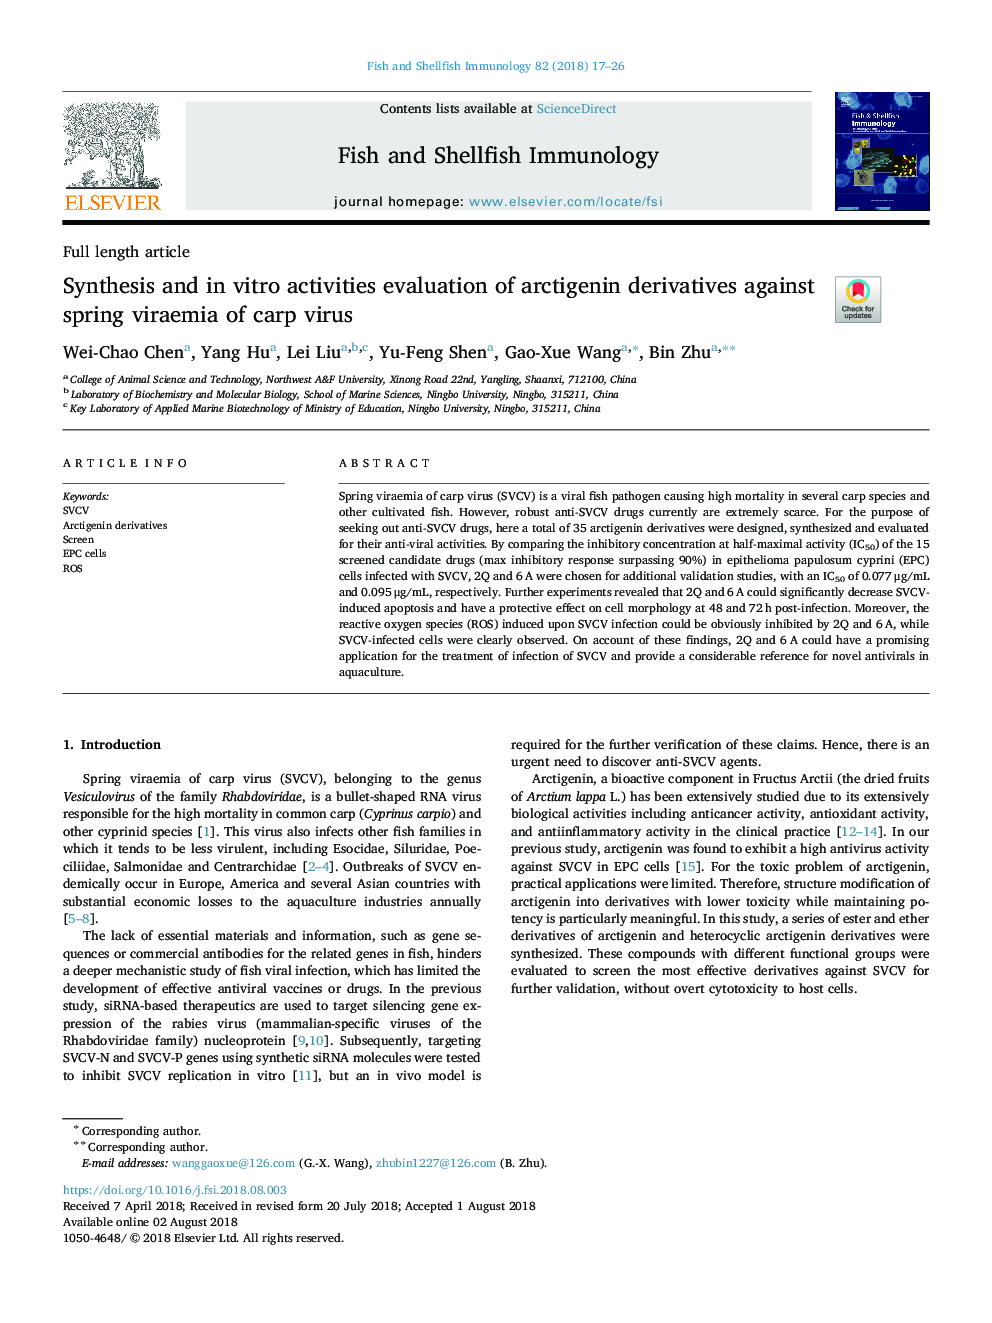 Synthesis and in vitro activities evaluation of arctigenin derivatives against spring viraemia of carp virus